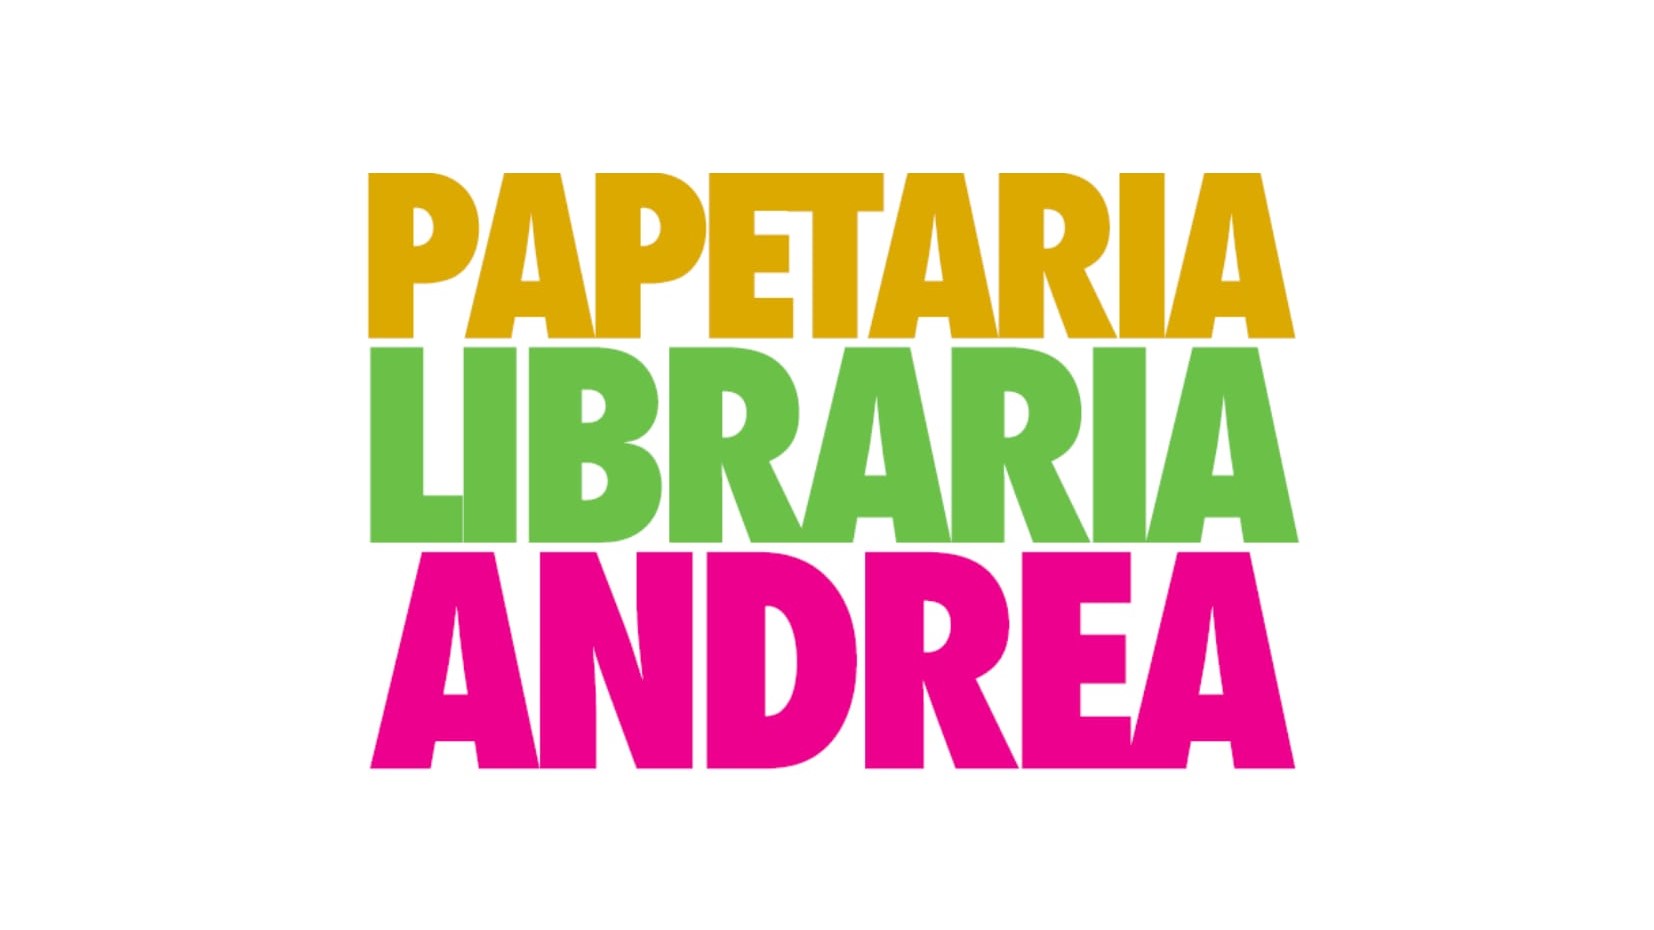 Papetaria Libraria Andrea